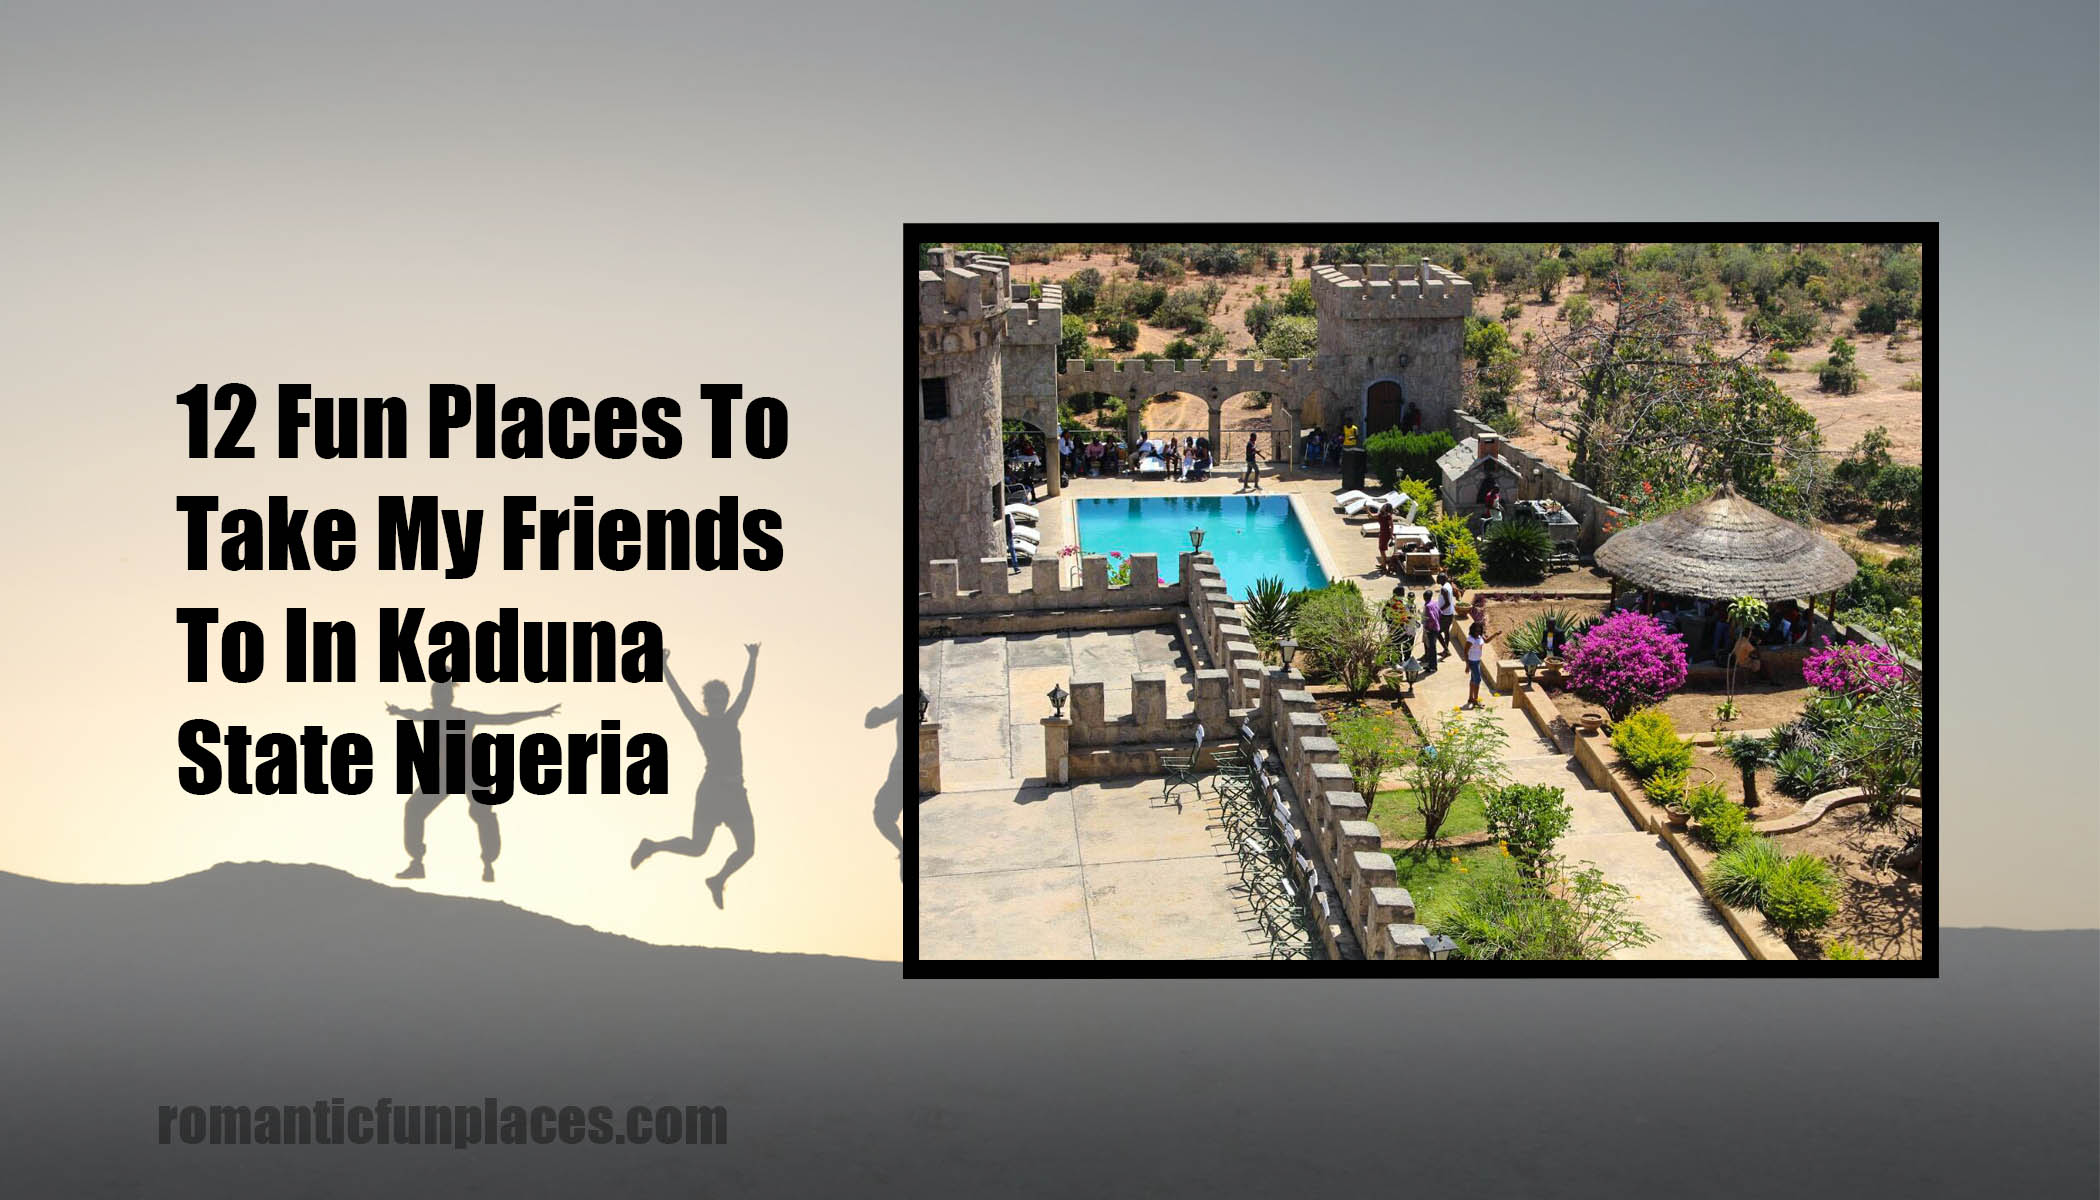 12 Fun Places To Take My Friends To In Kaduna State Nigeria